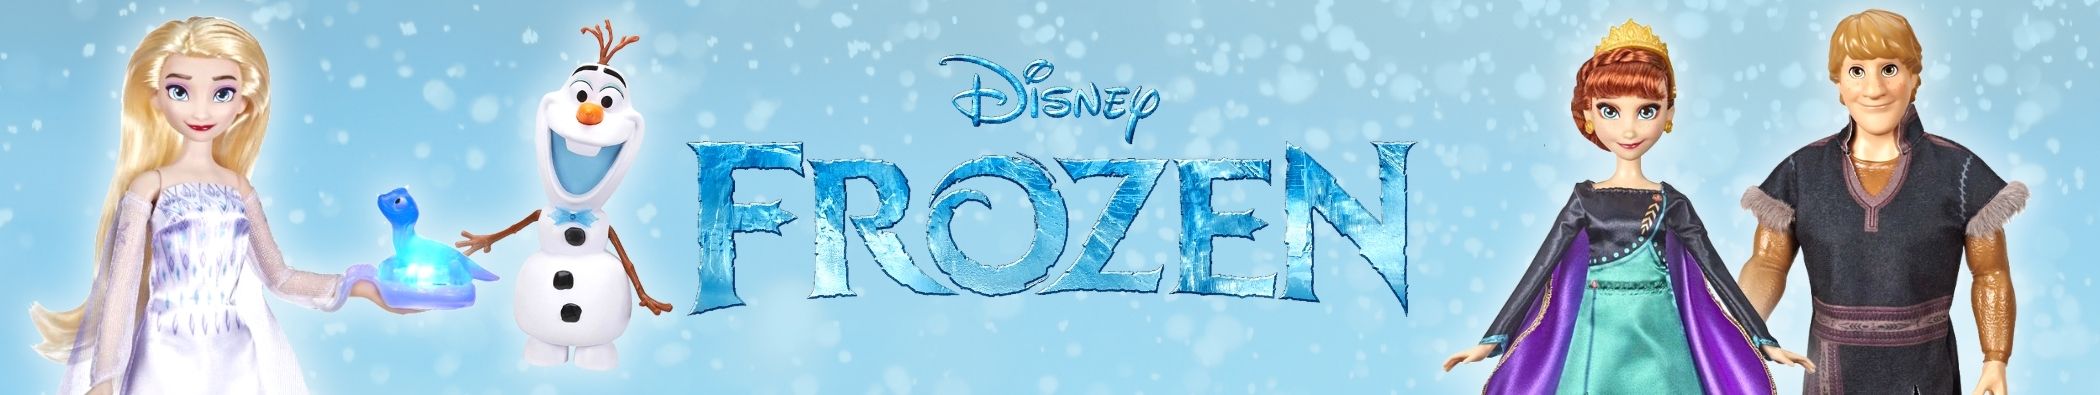 Bisutería Frozen